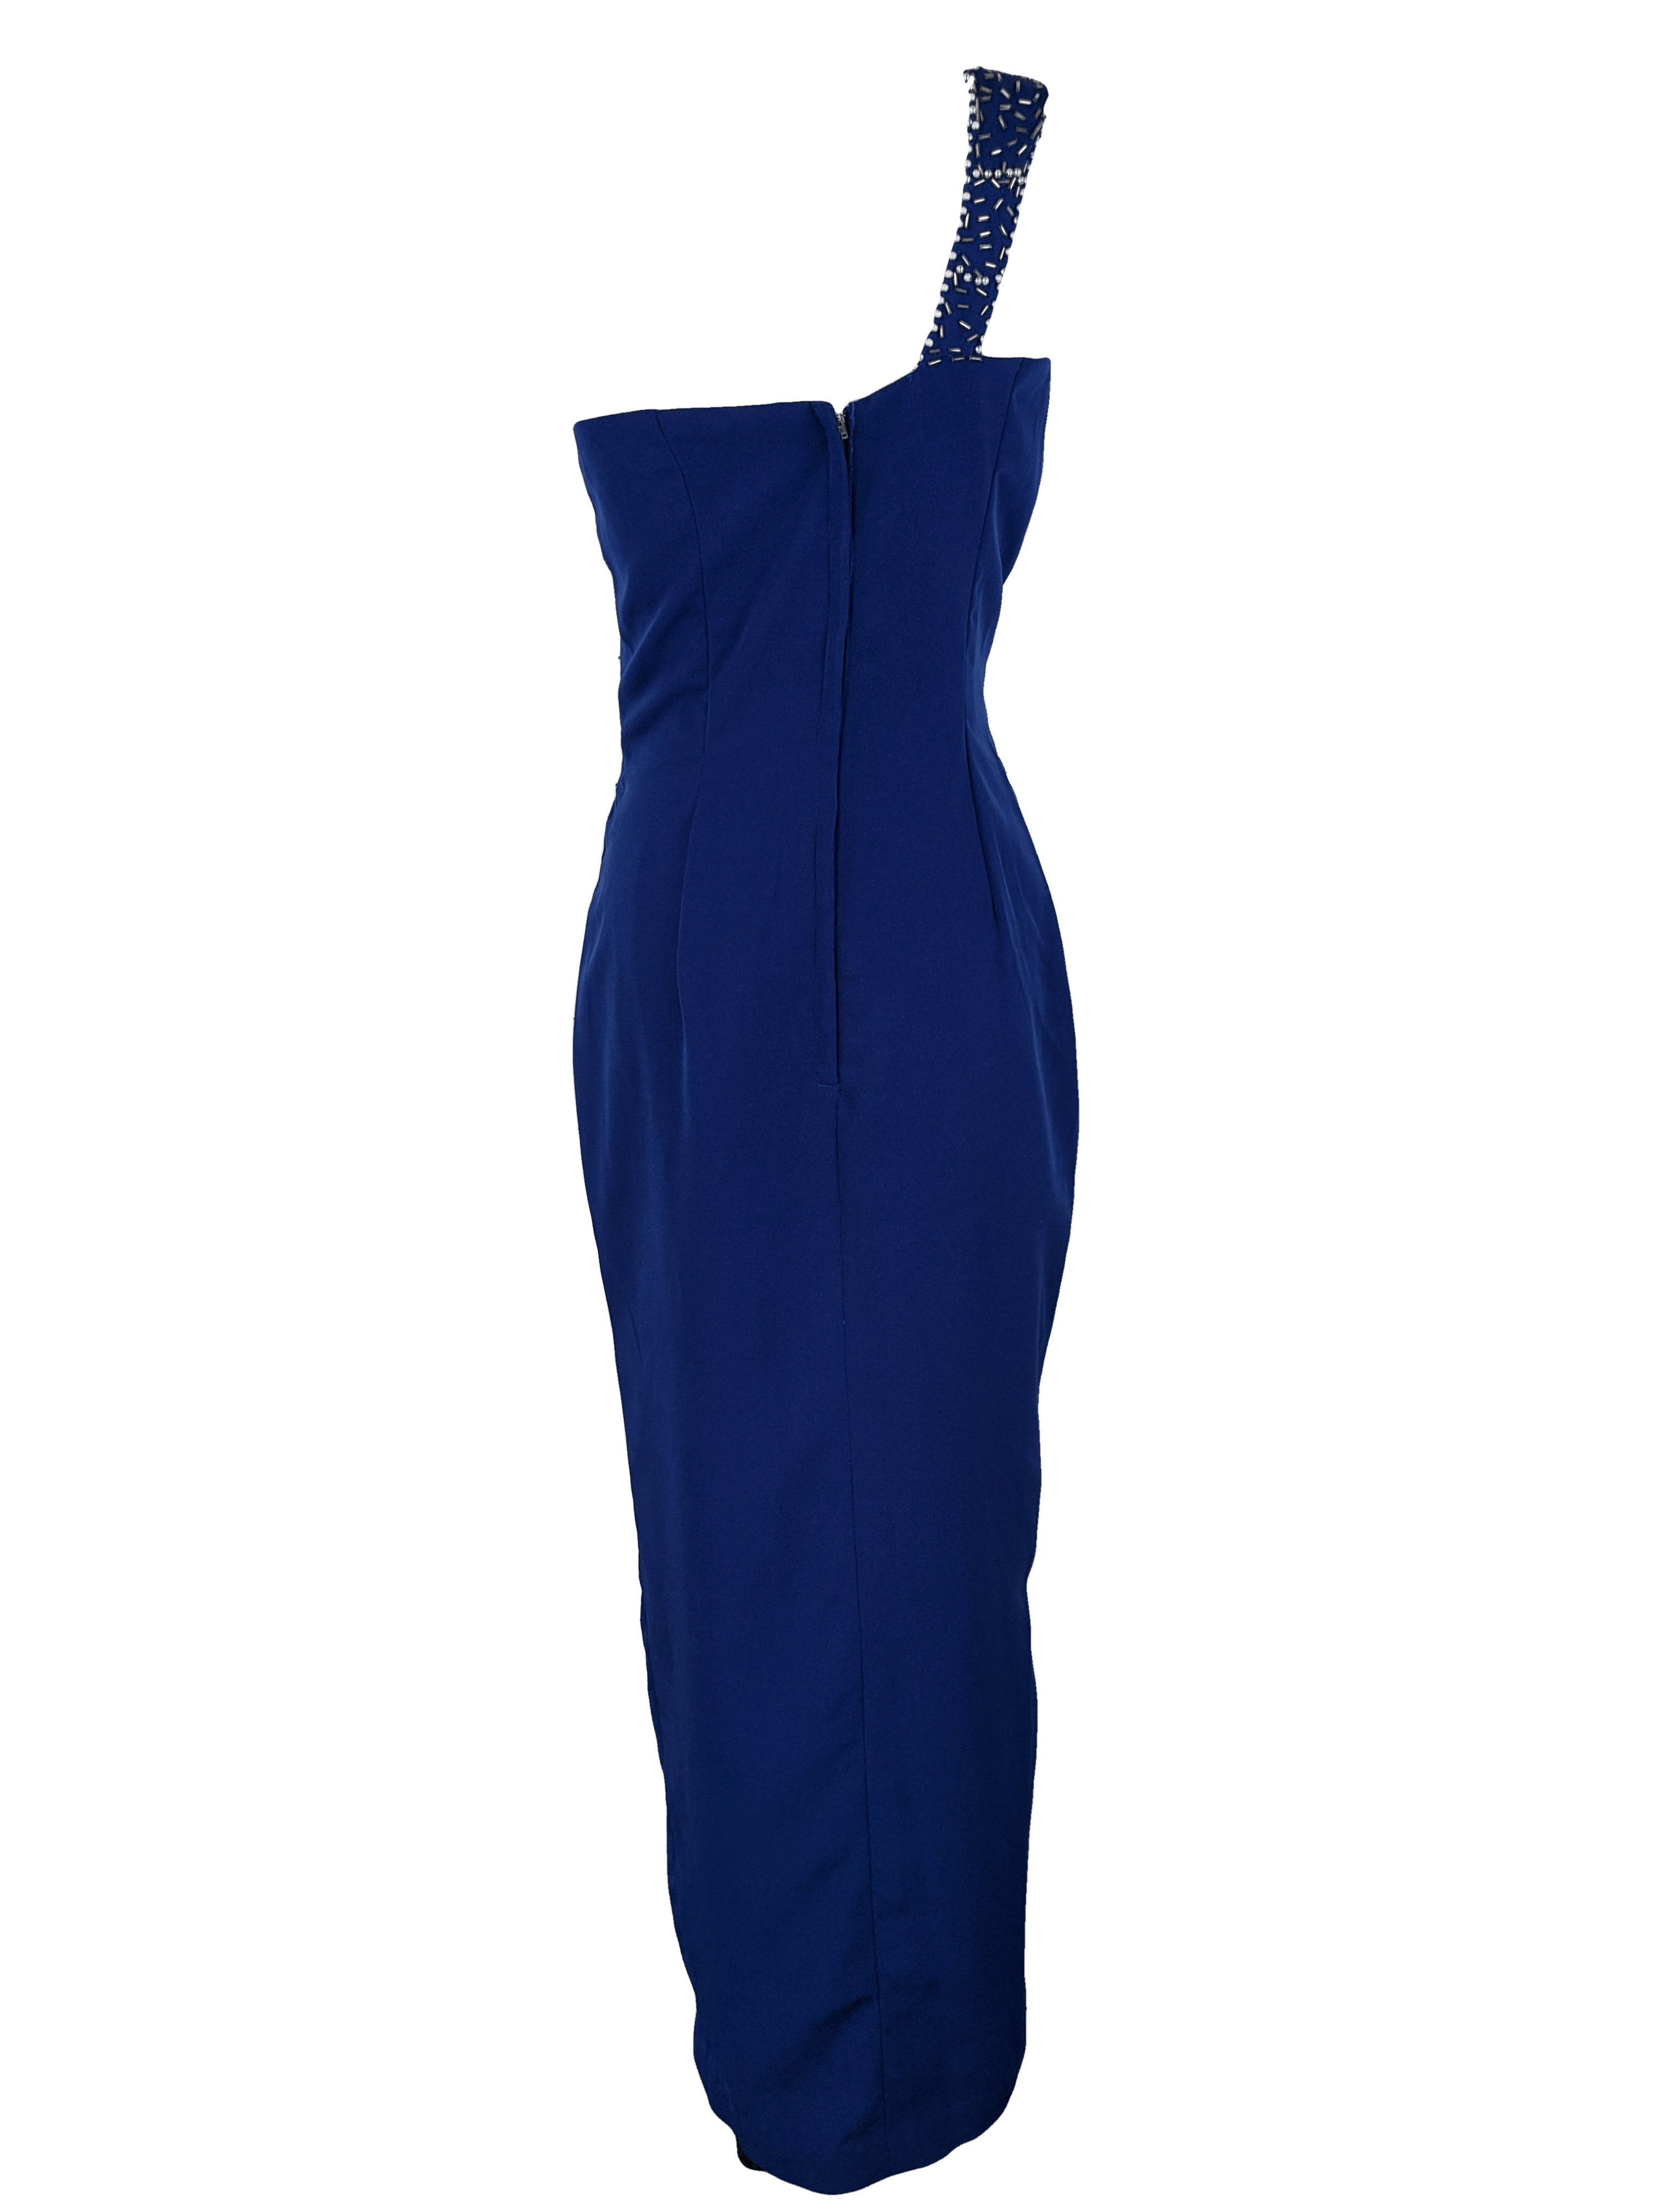 royal blue pencil dress